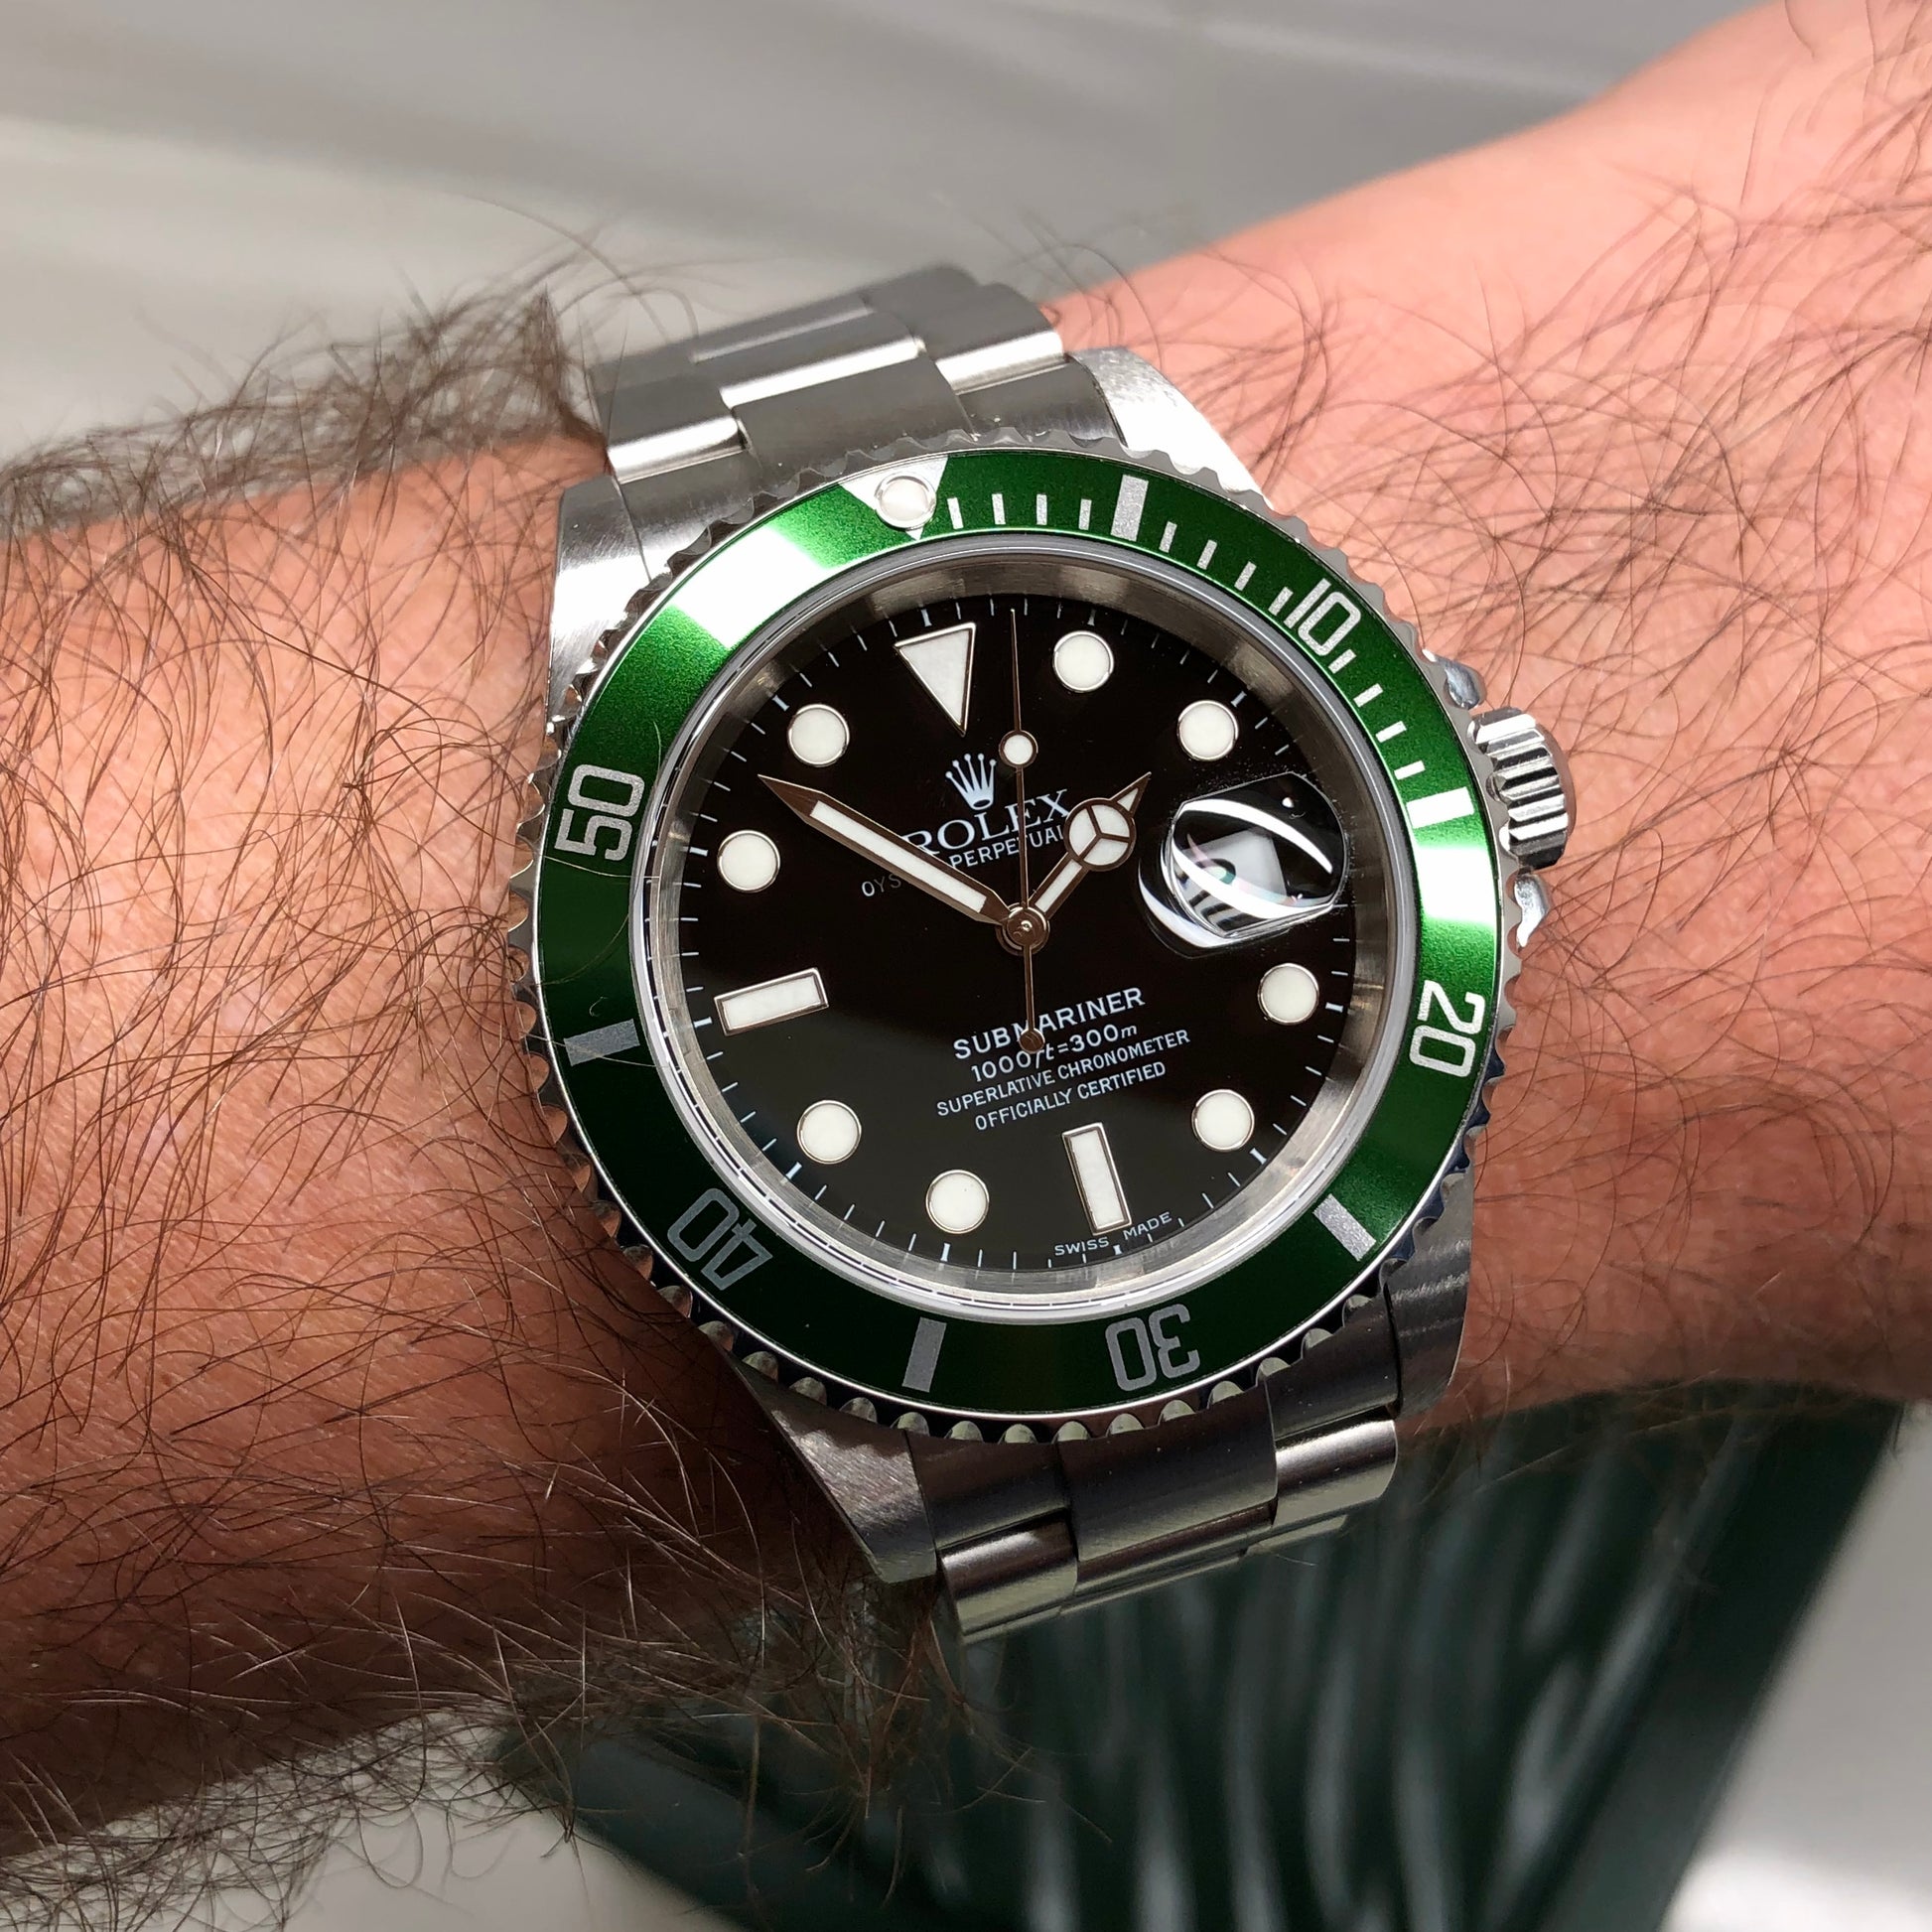 Rolex Submariner Green 50th Anniversary Flat 4 Men's Watch 16610LV